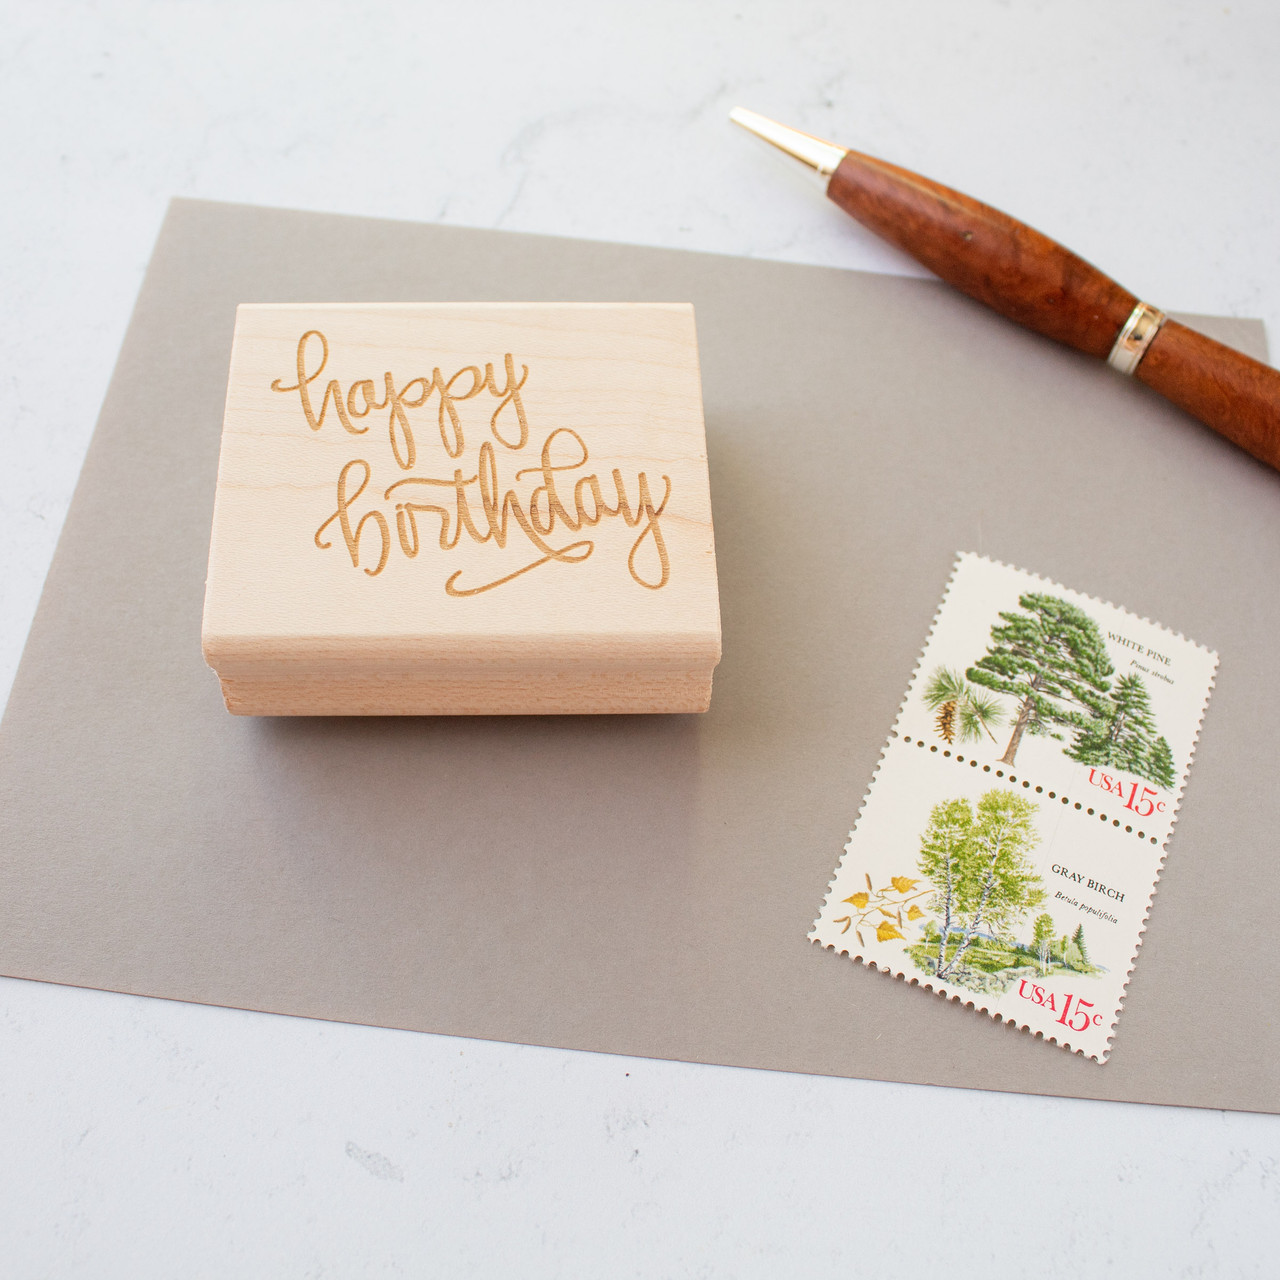 Happy Birthday Rubber Stamp